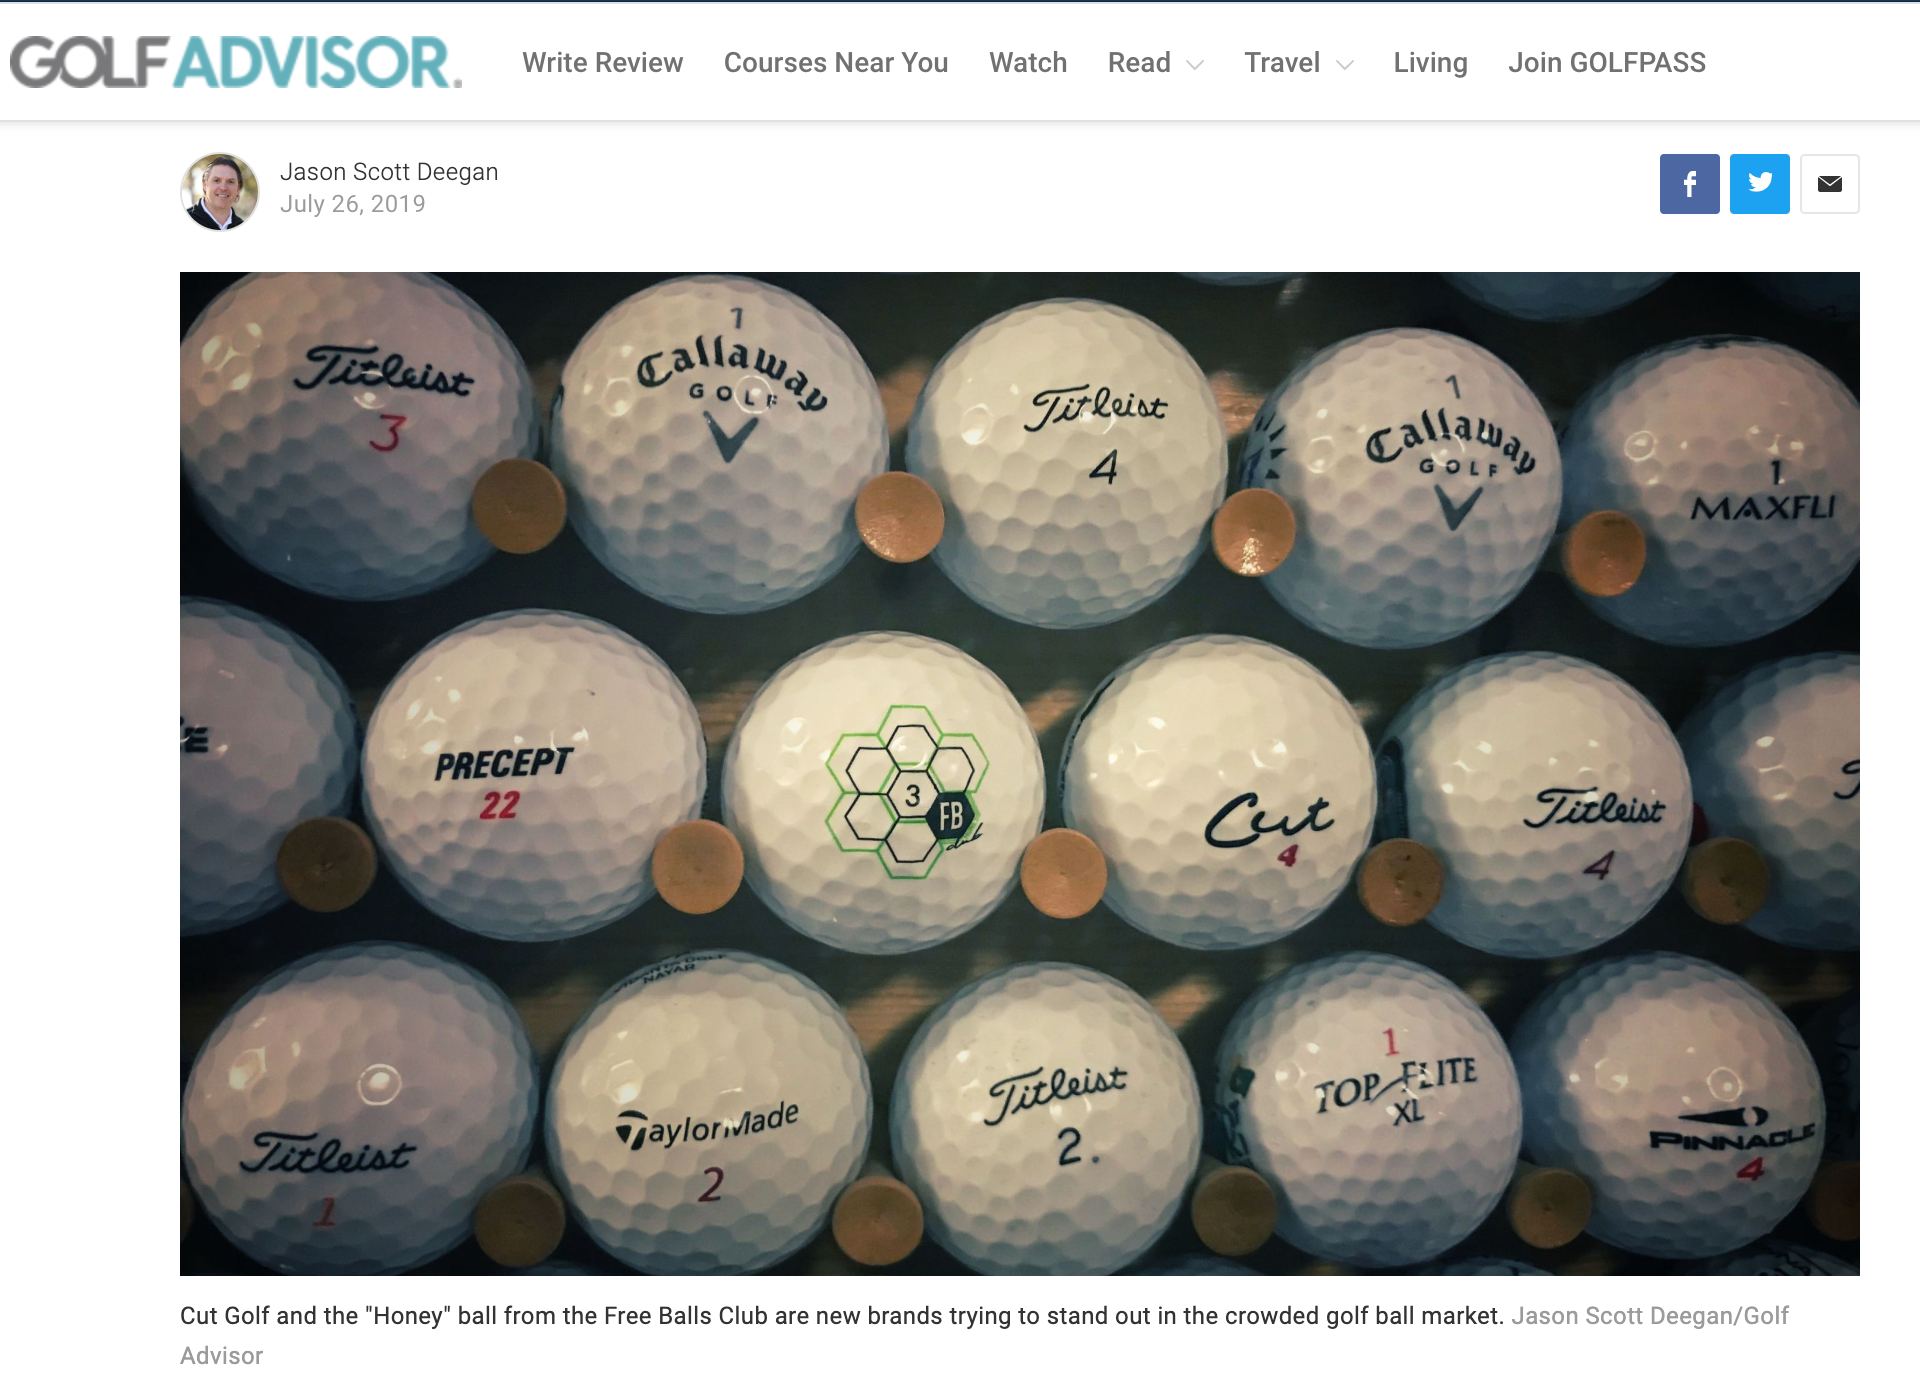 Golf Advisor: "Underdogs: Smaller golf ball companies take on the big boys"